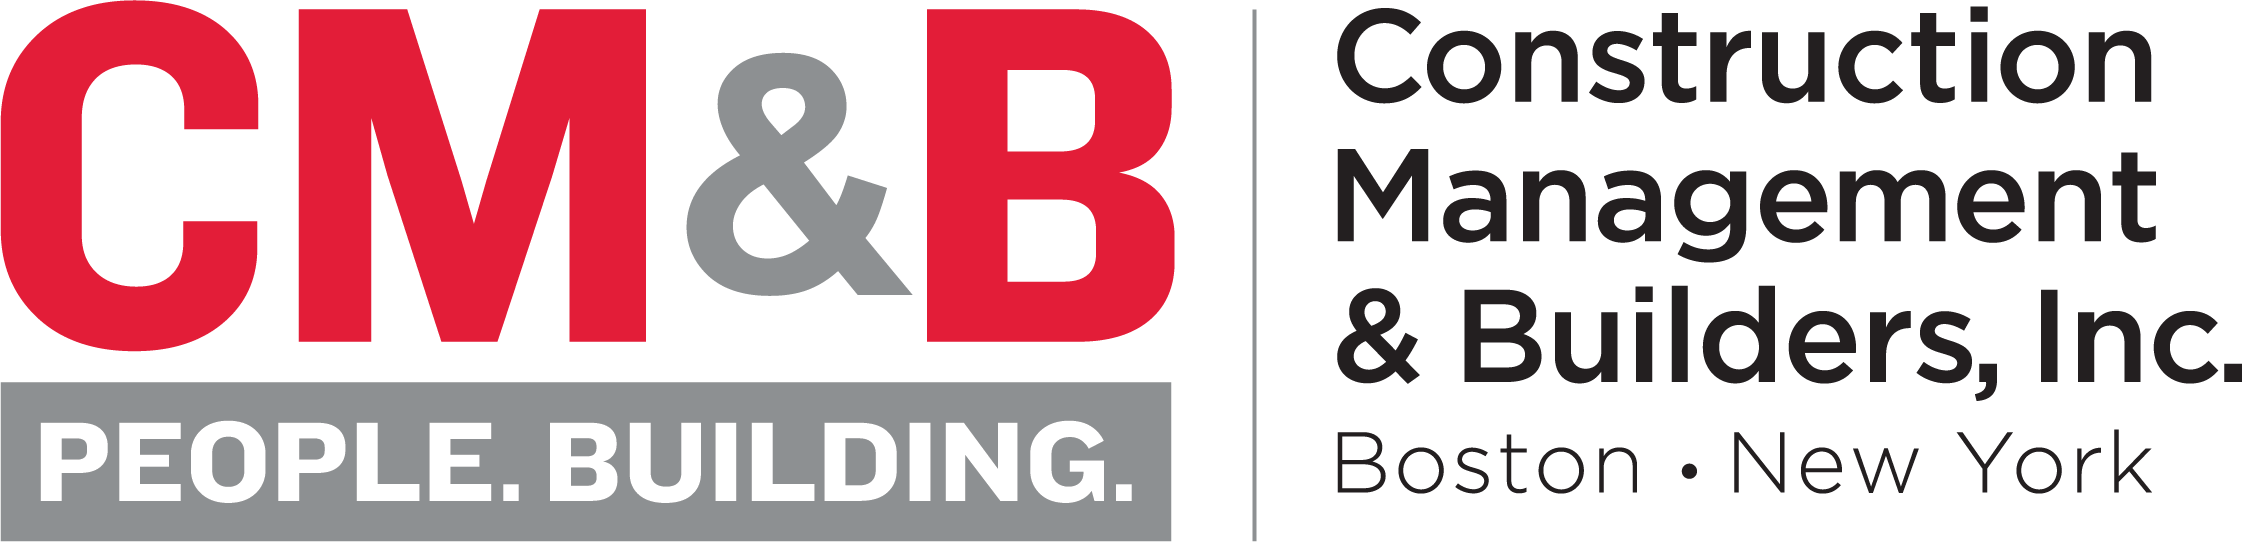 Construction Management & Builders, Inc. Company Logo